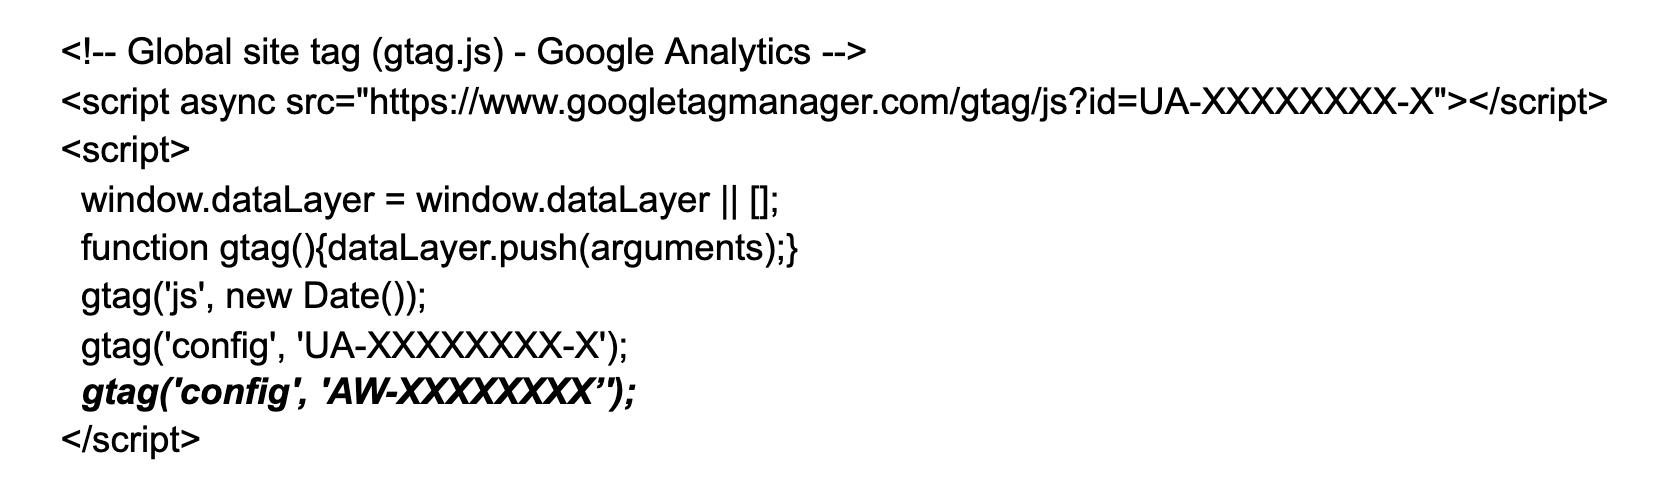 Google Ads Code in Google Analytics